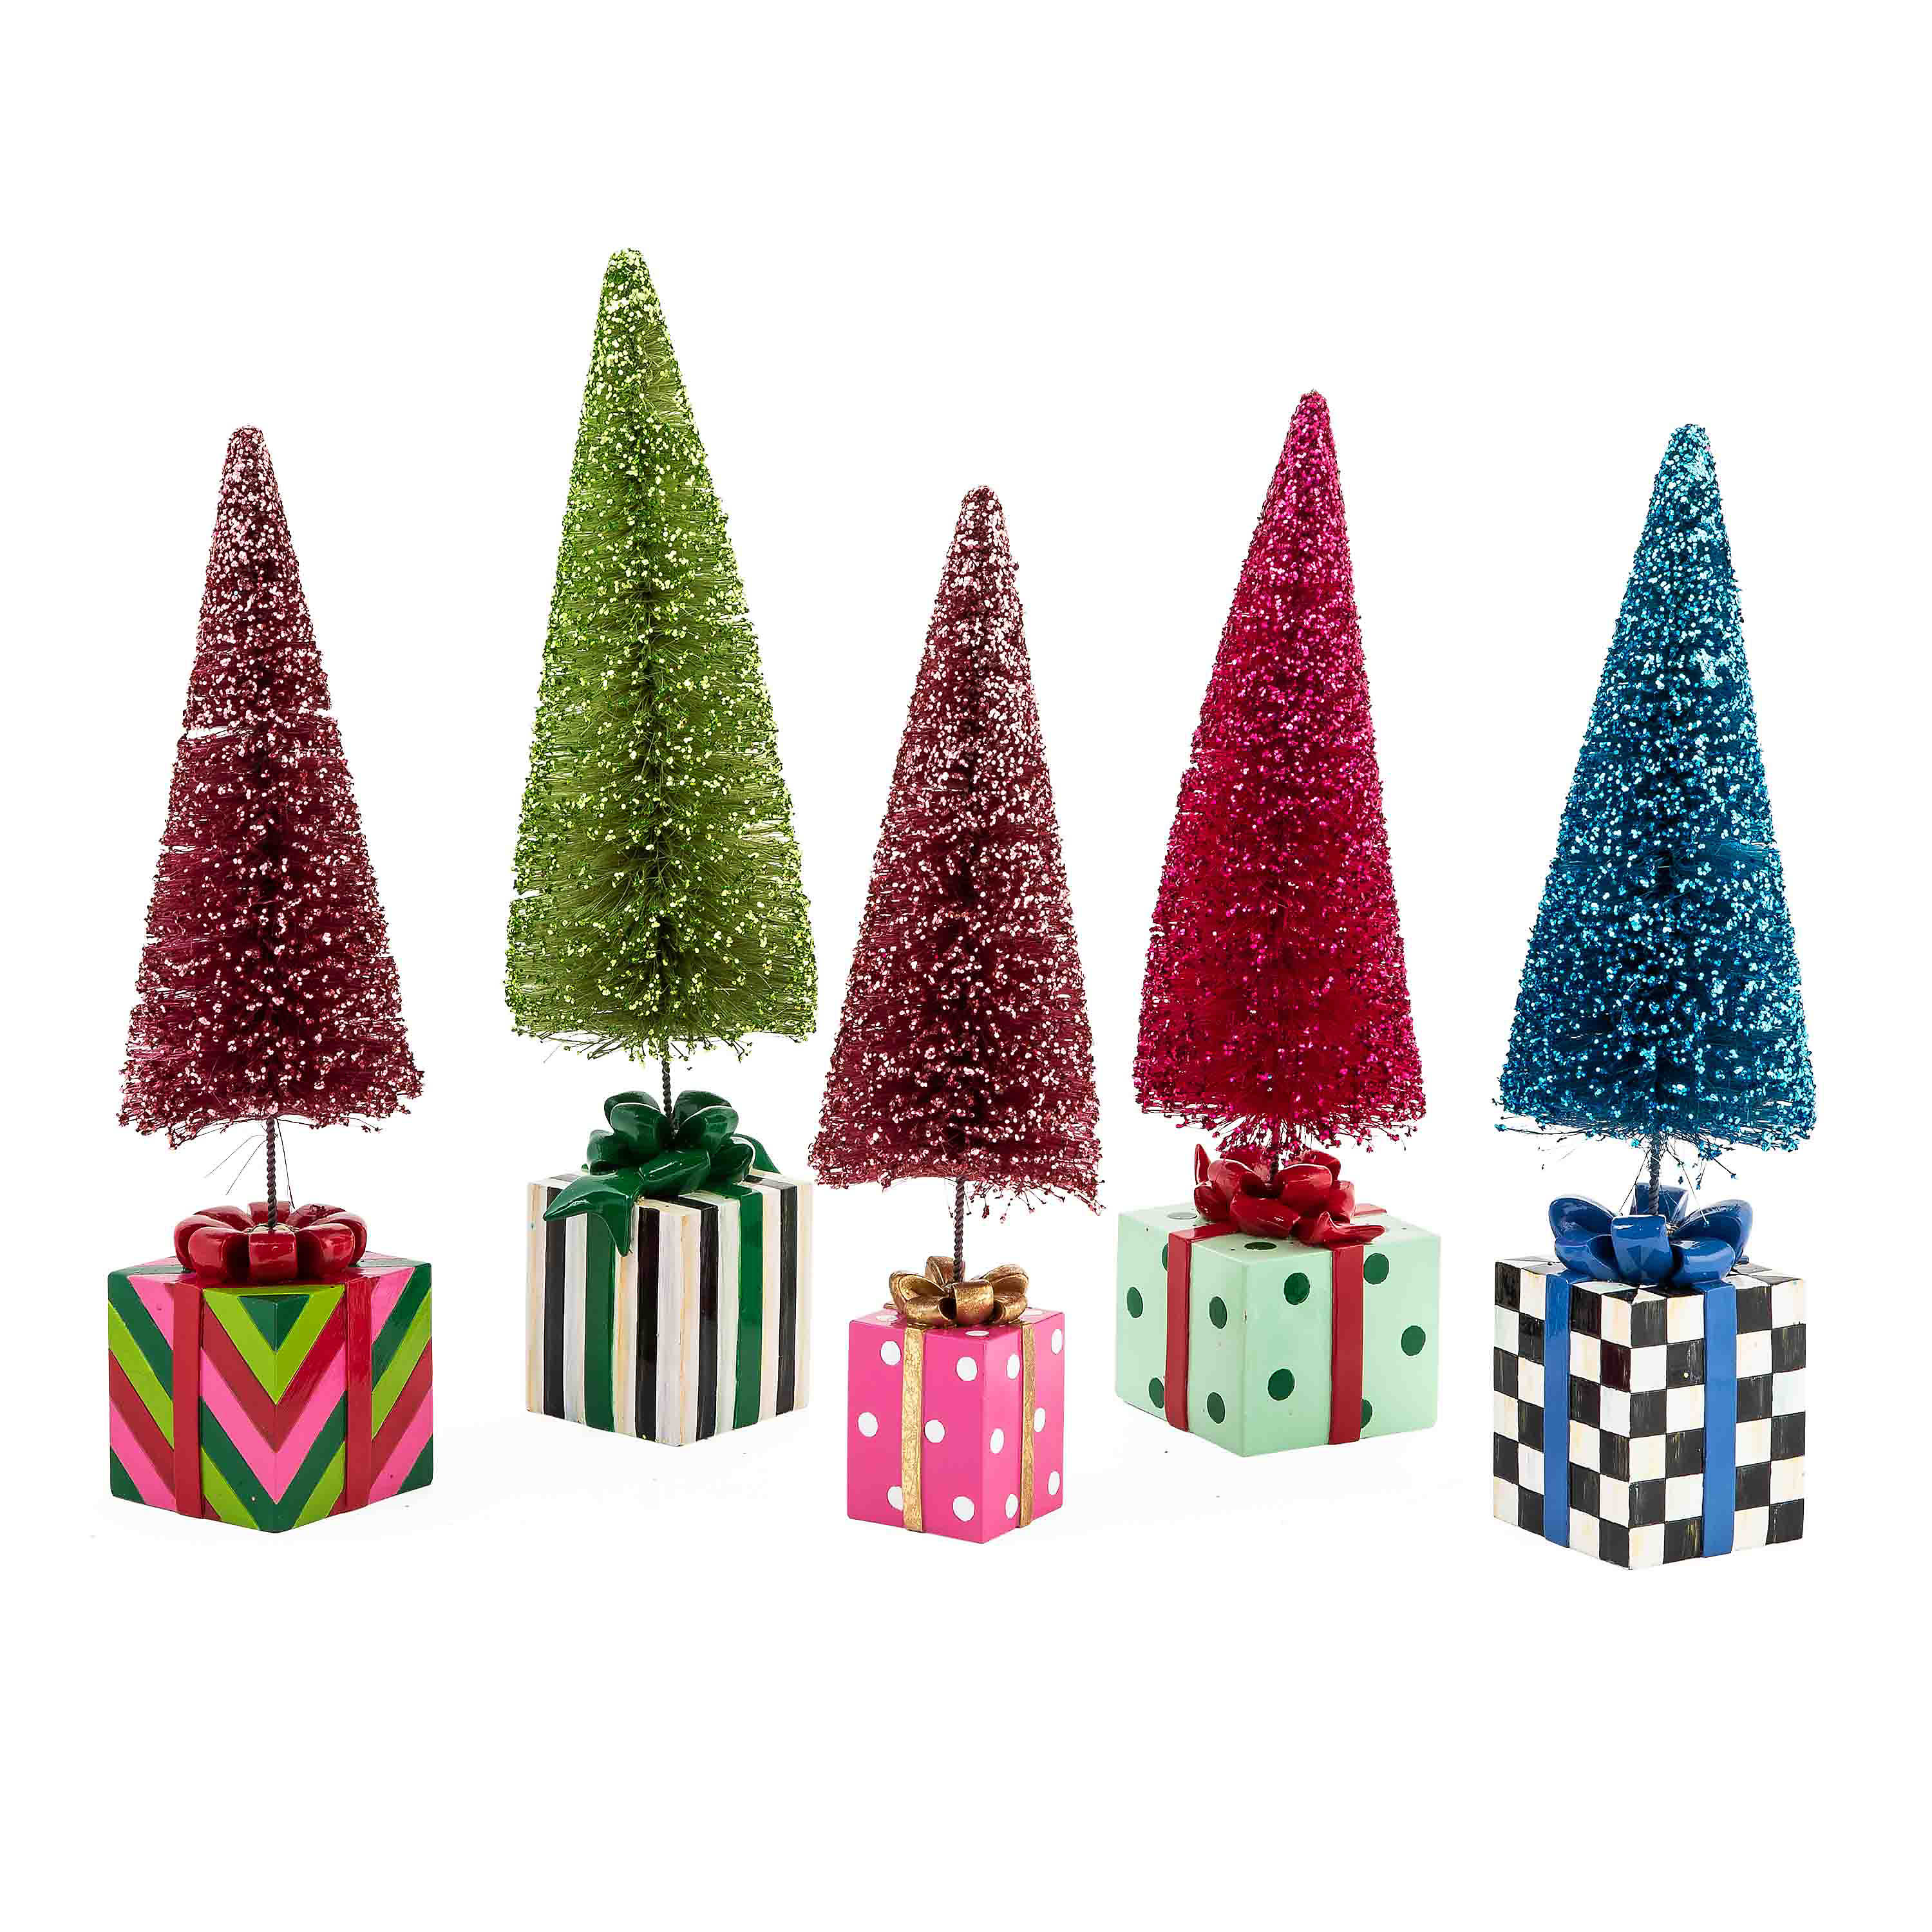 Granny Kitsch Bottle Brush Gift Trees, Set of 5 mackenzie-childs Panama 0